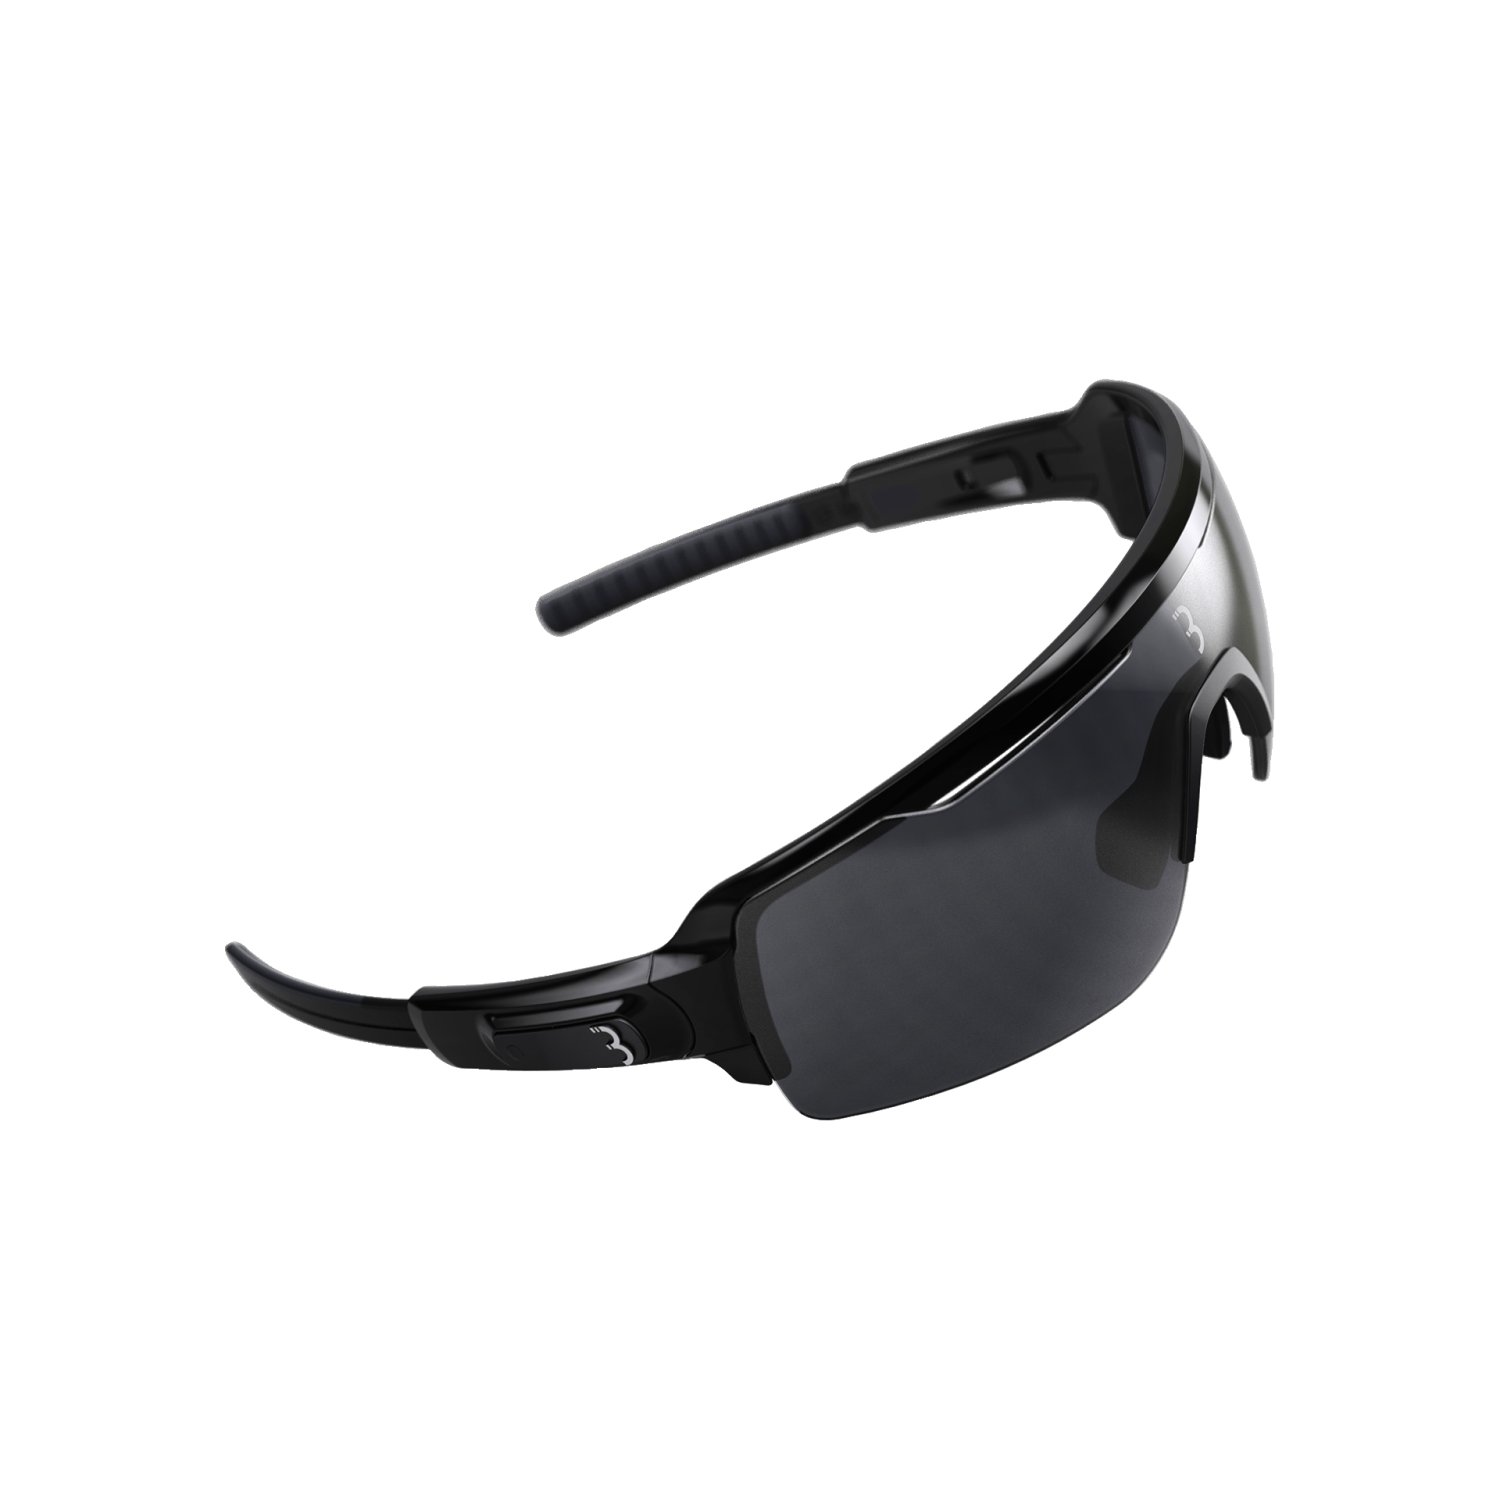 Очки велосипедные BBB 2019 sunglasses Commander PC Smoke MLC silver lens PC clear, glossy black, BSG купить на ЖДБЗ.ру - фотография № 2